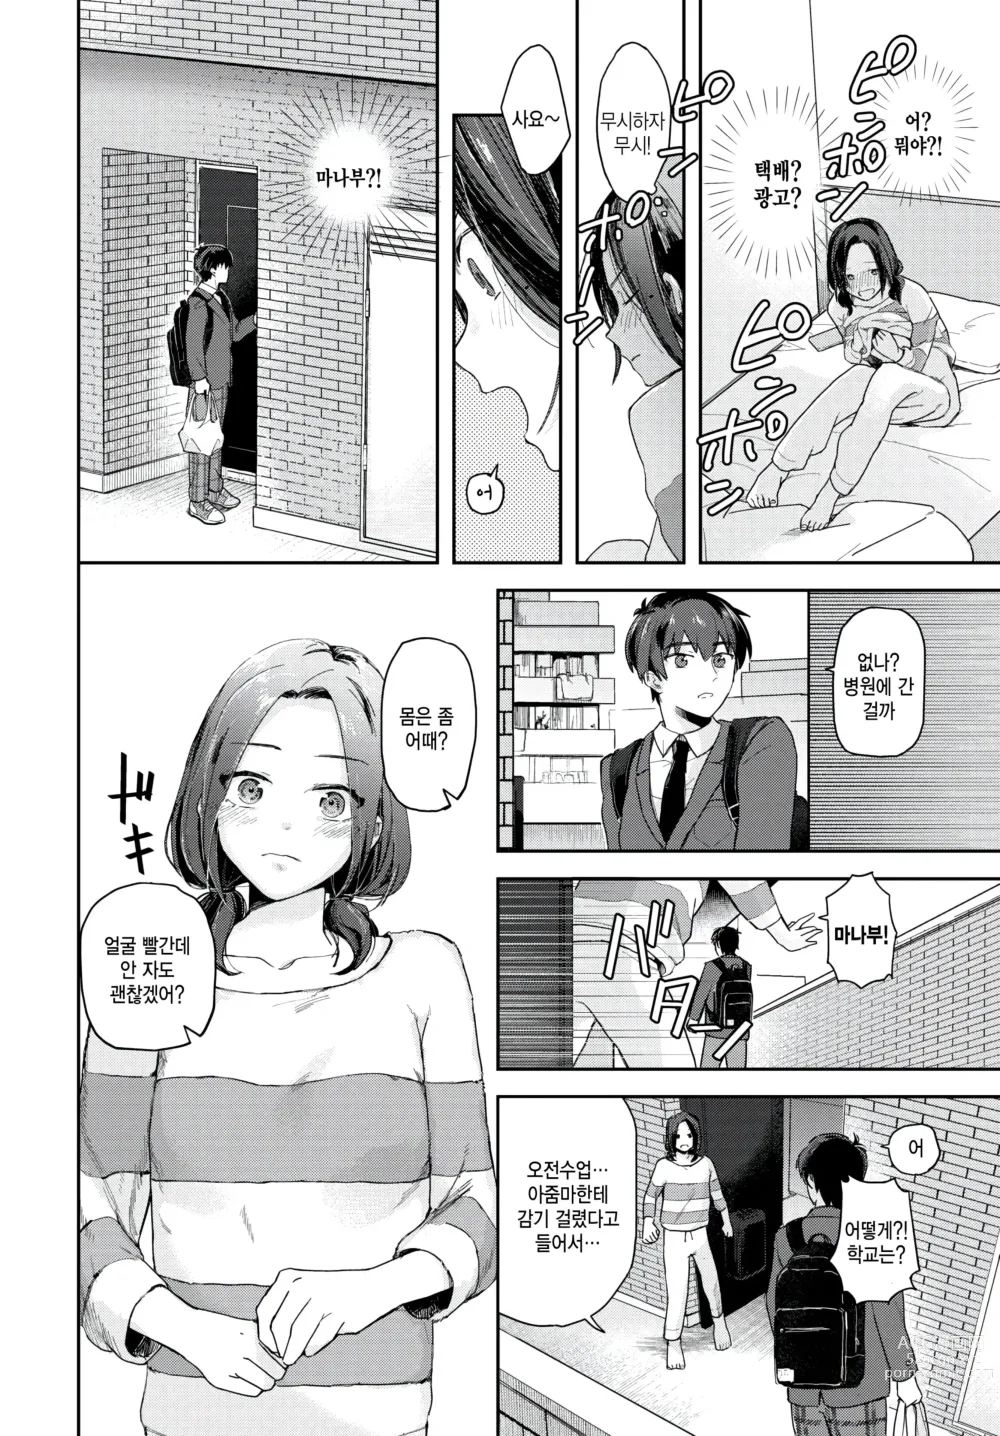 Page 4 of manga Surechigai Souai